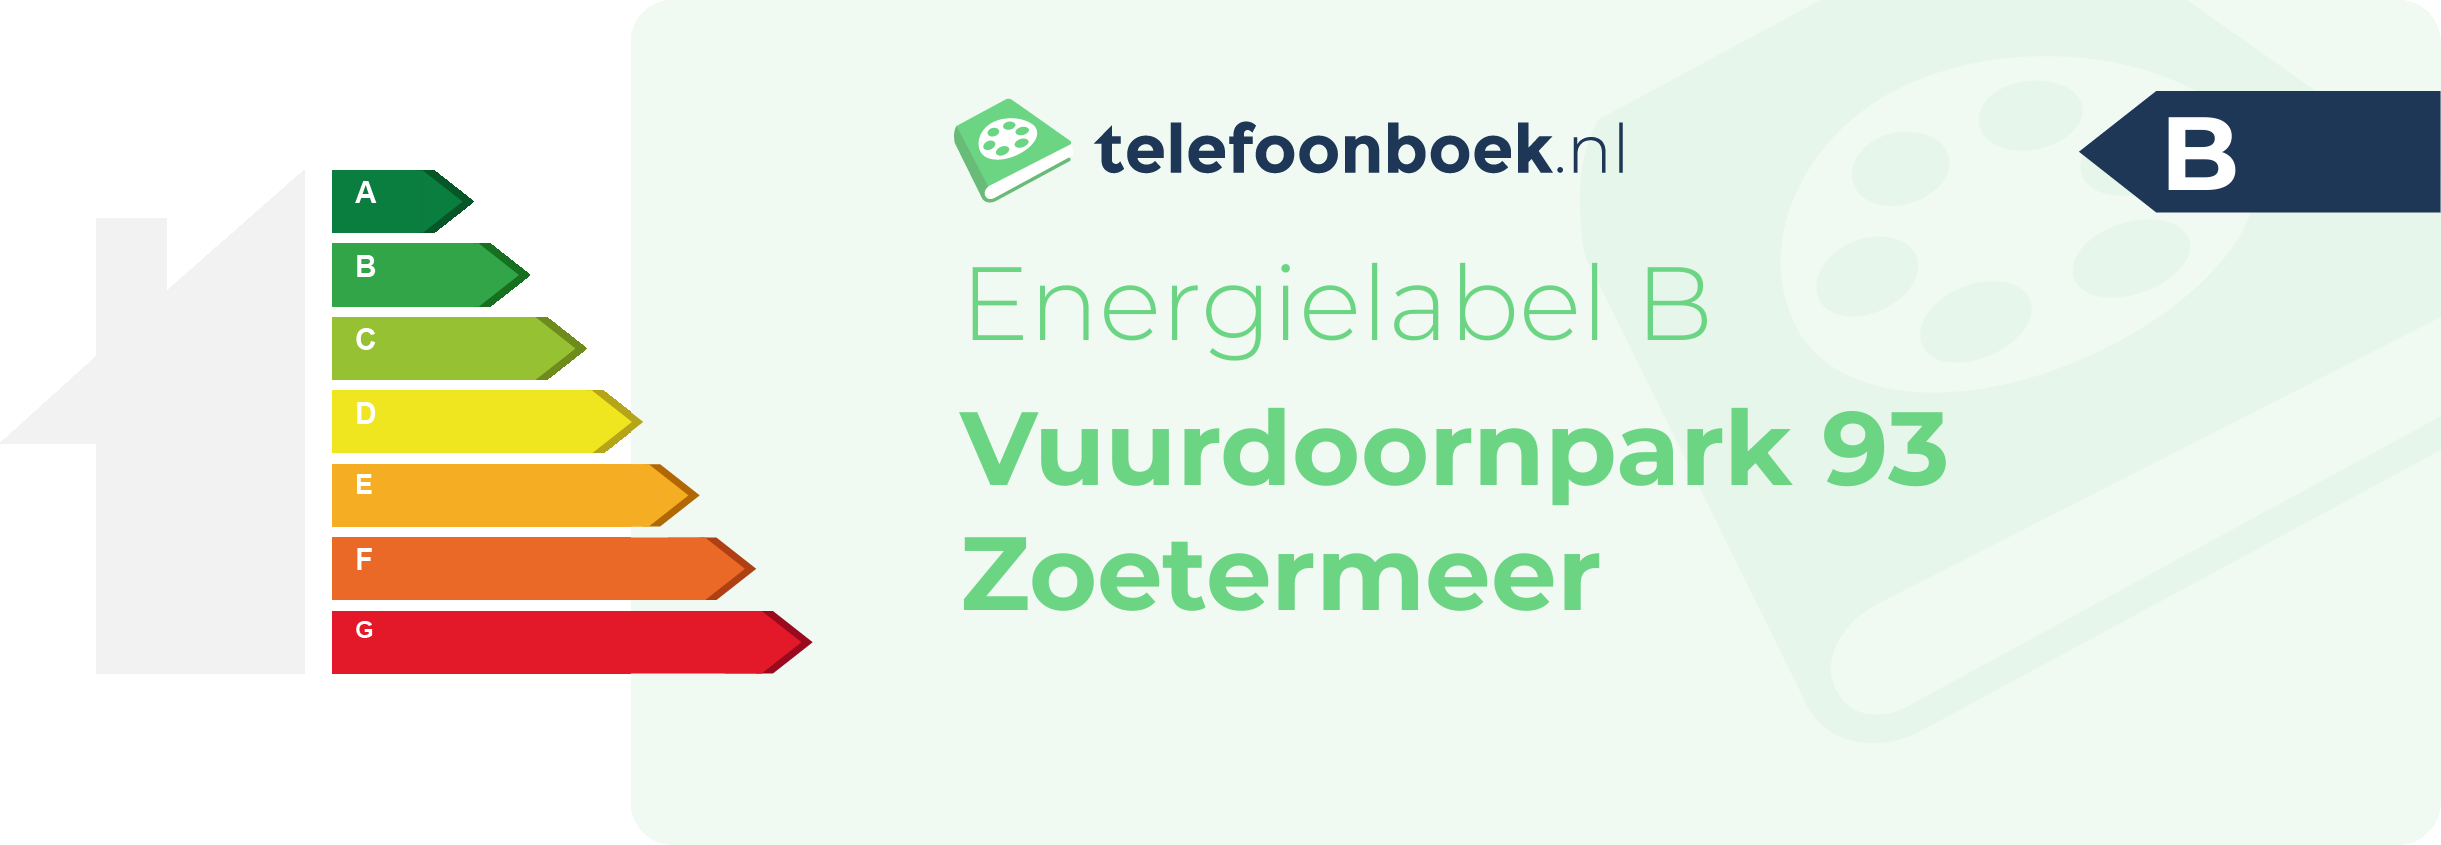 Energielabel Vuurdoornpark 93 Zoetermeer